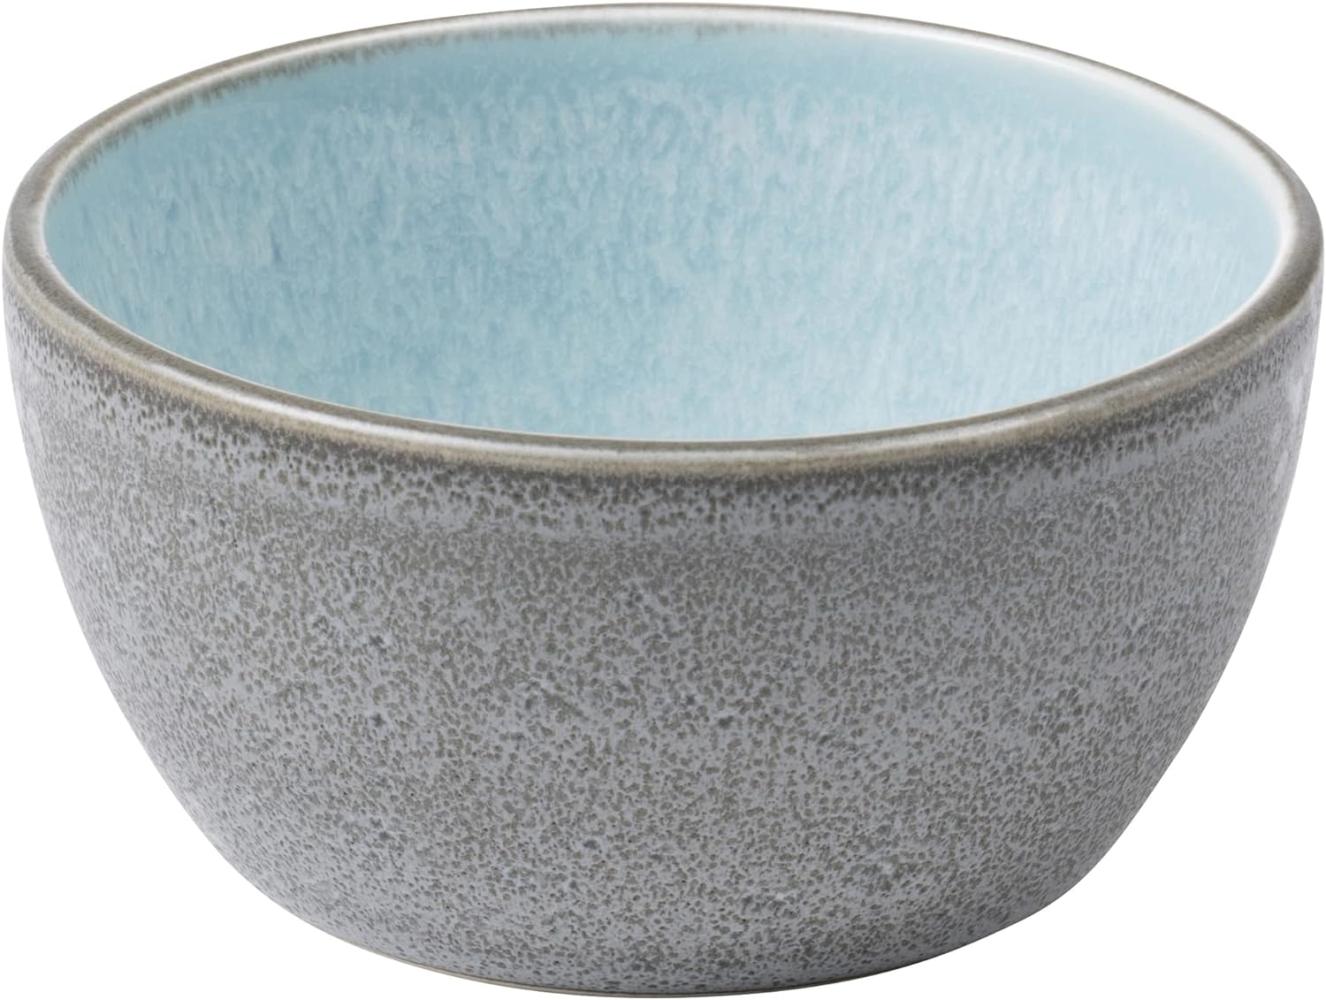 Bitz Bowl grey/light blue 10 cm Bild 1